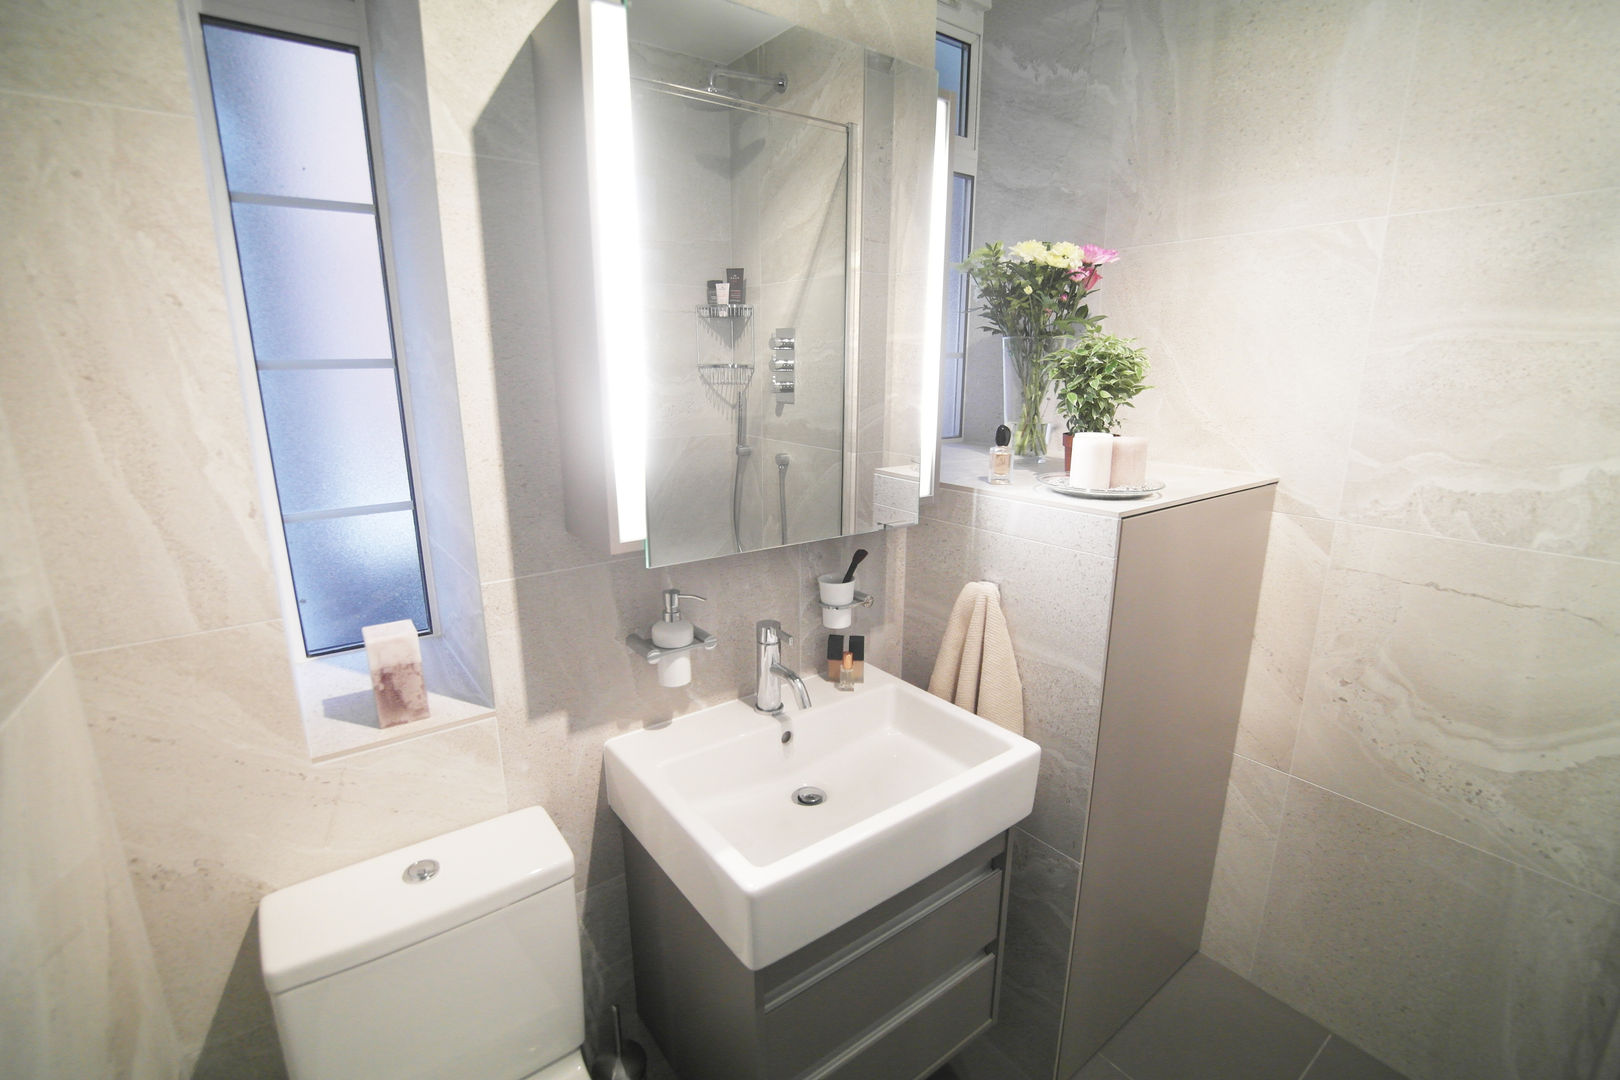 St John's Wood Patience Designs Studio Ltd Modern Banyo bathroom,interior,design